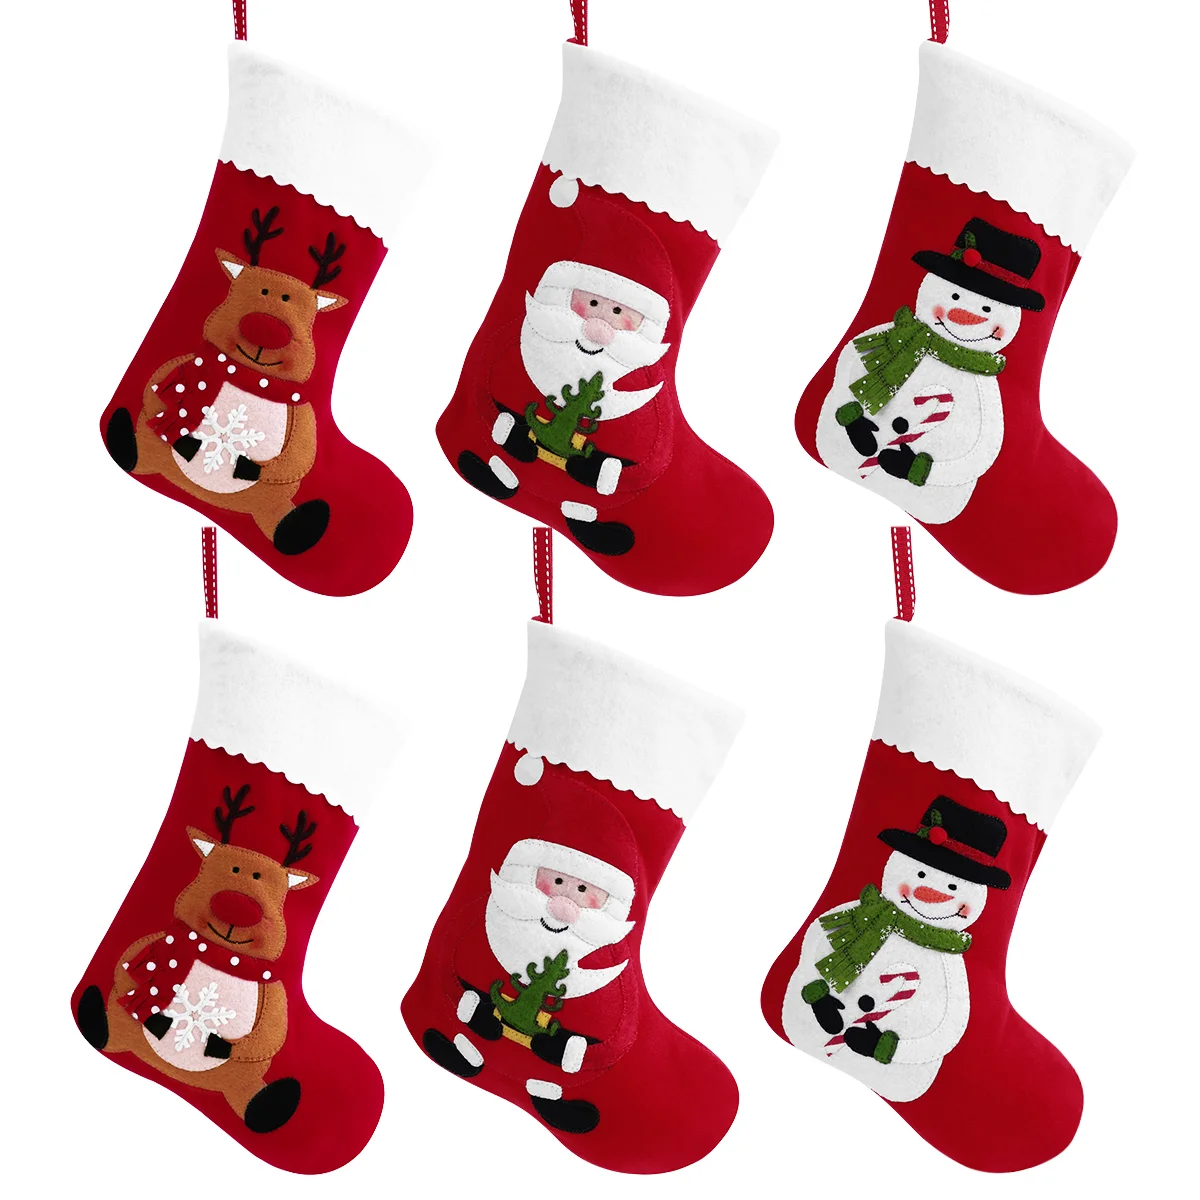 

6Pcs Christmas Stockings, Santa Snowman Reindeer Design Xmas Fireplace Hanging Stockings Plush Socks Holiday Treat Candy Bags